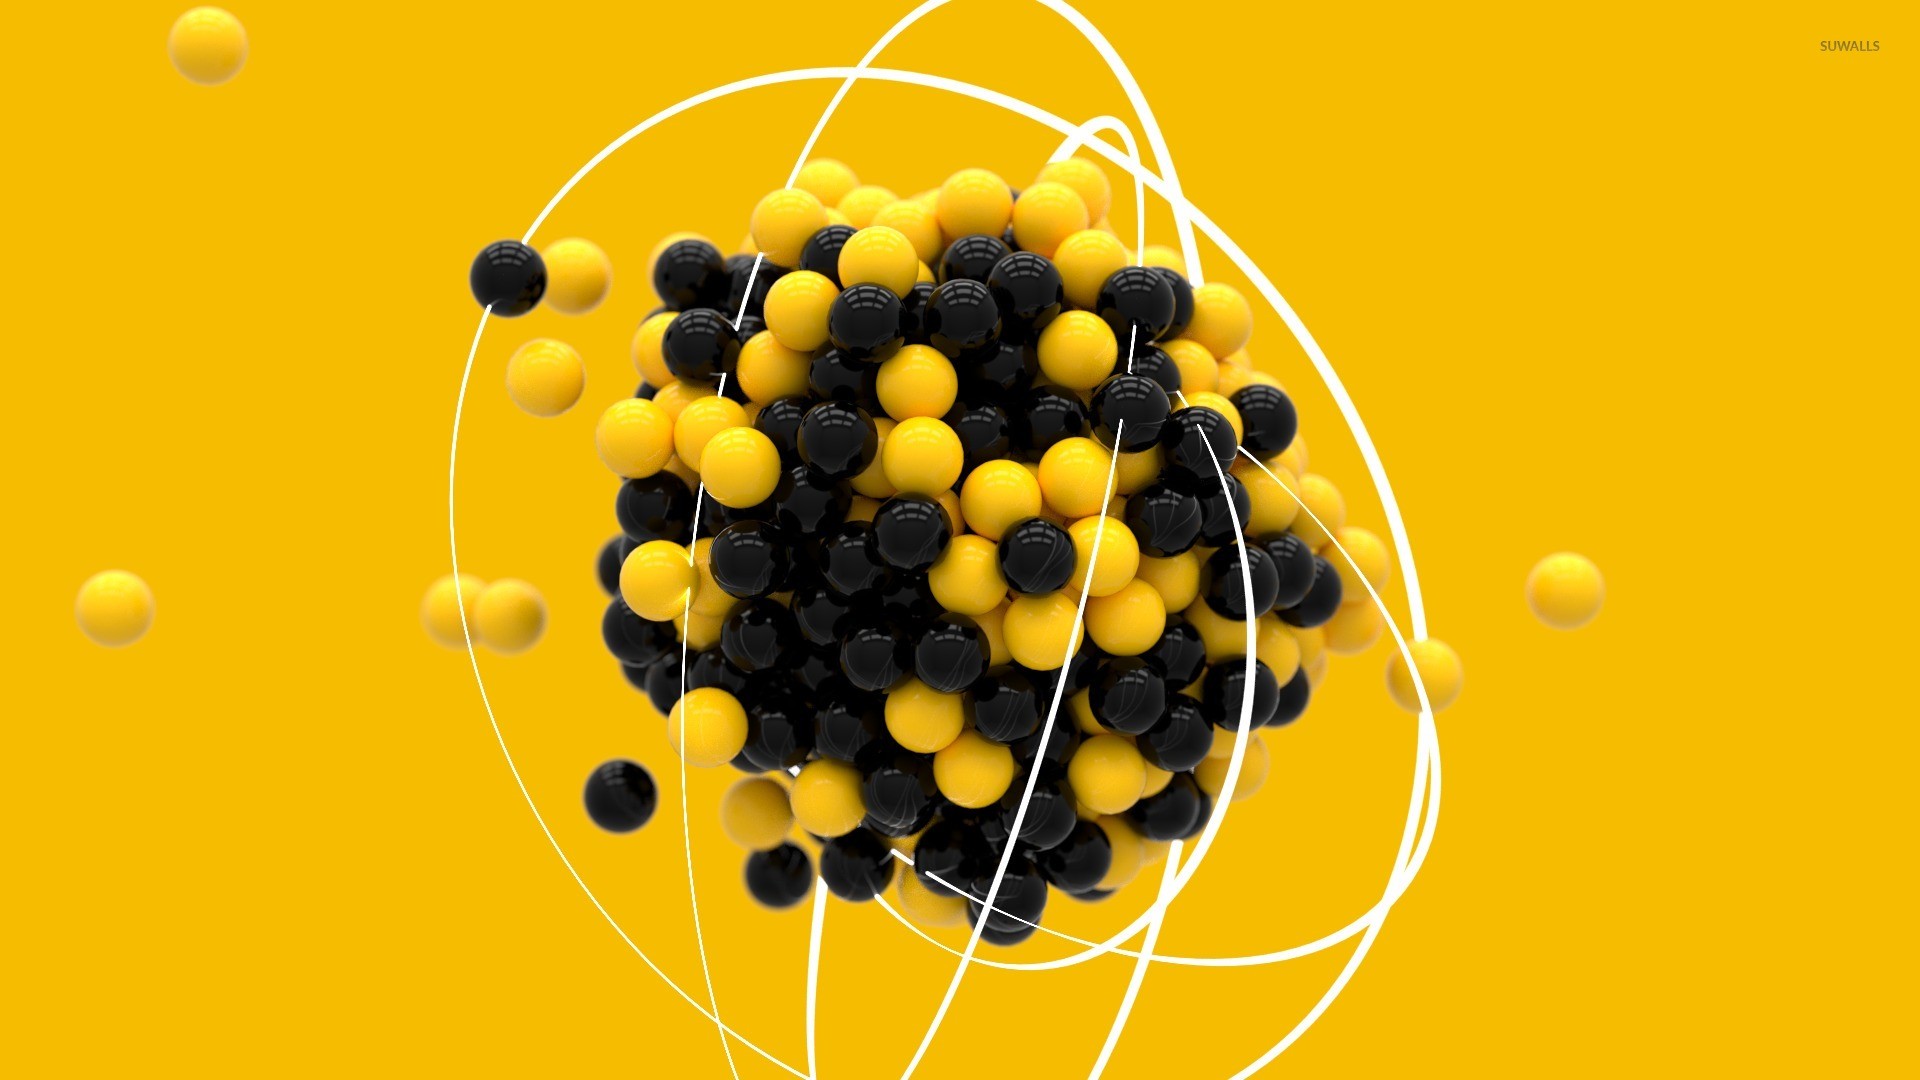 1920x1080 Black and yellow spheres wallpaper  jpg